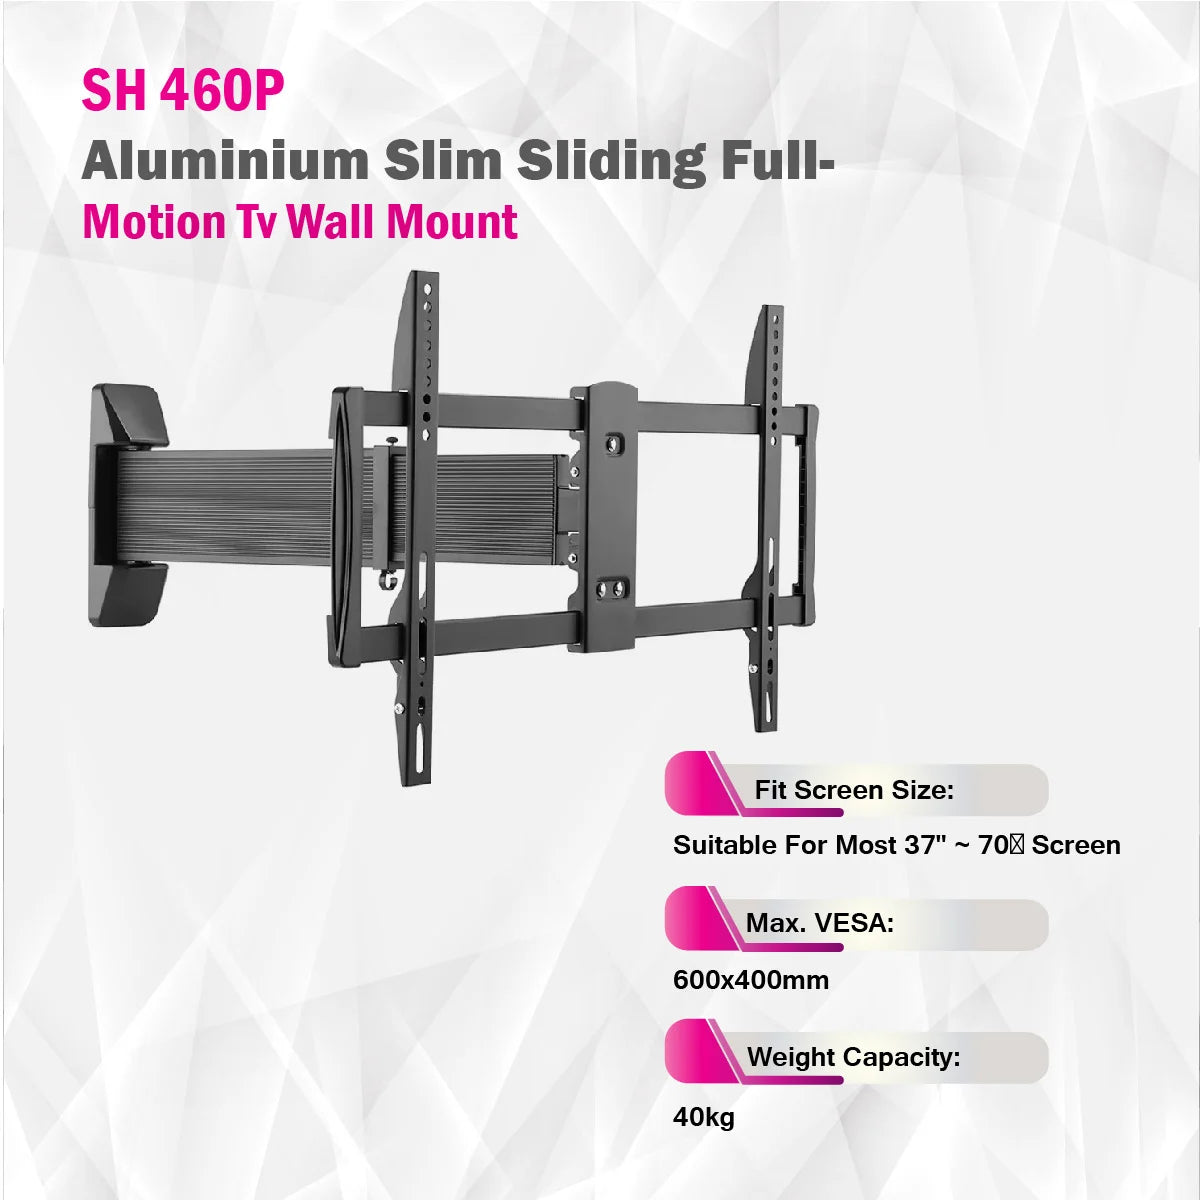 Skill Tech SH 460P - Aluminium Slim Sliding Full-Motion Tv Wall Mount